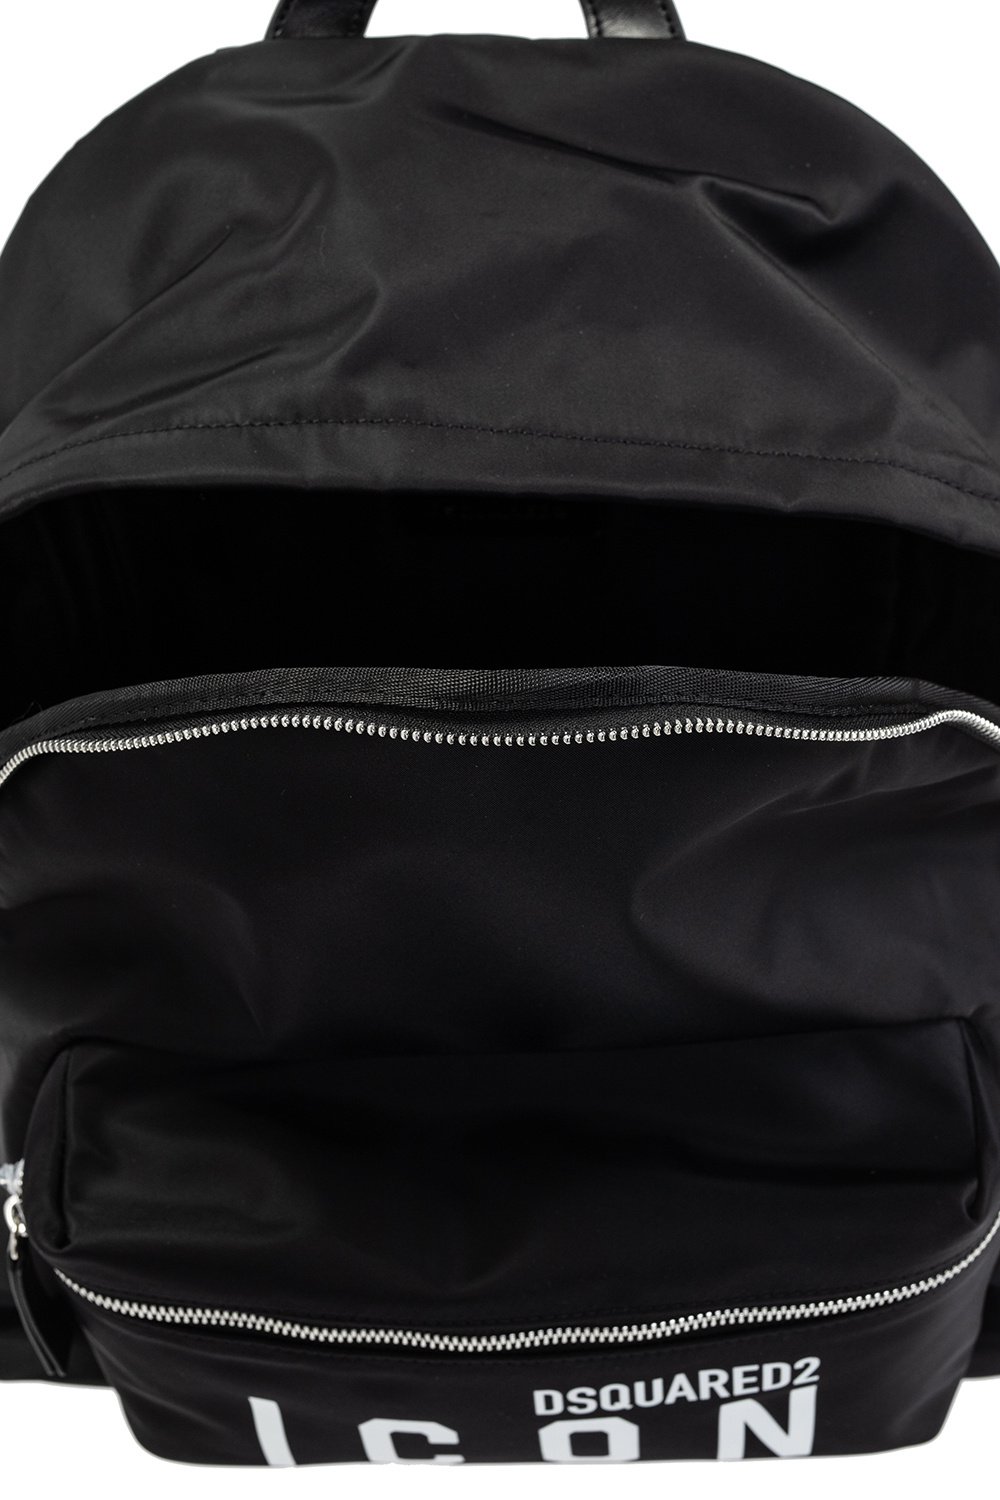 Dsquared2 kara sale handbags Shoulder backpacks accessories